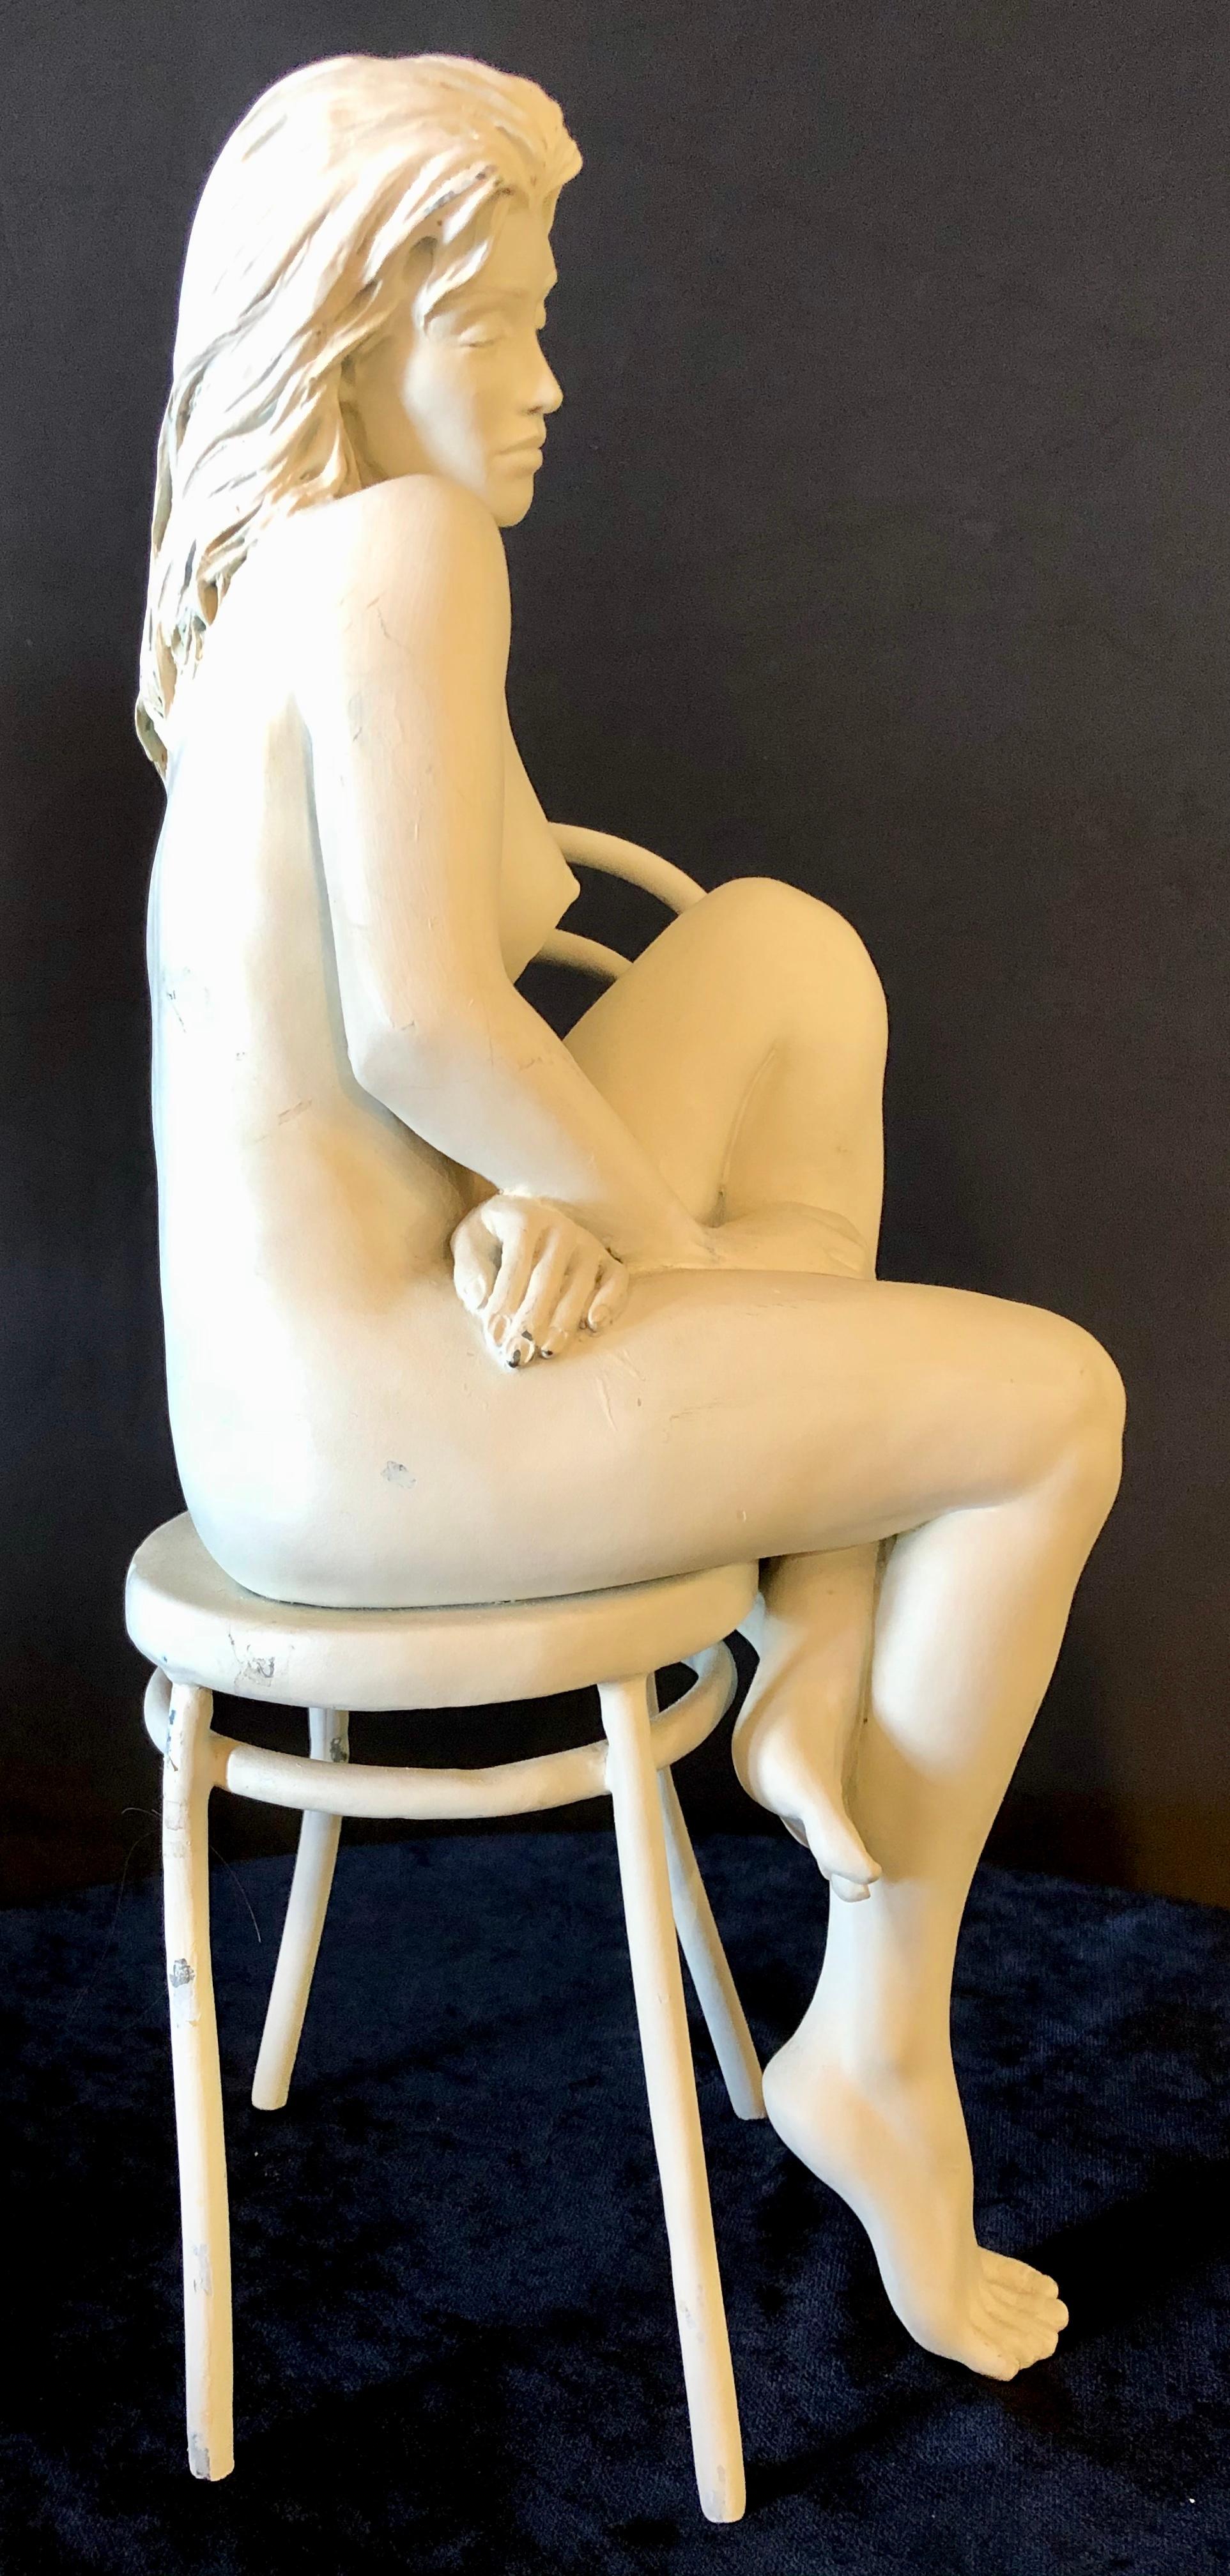 Bill Mack Solitude Maquette Bronze Sculpture Signed Original Female Nude Artwork 1